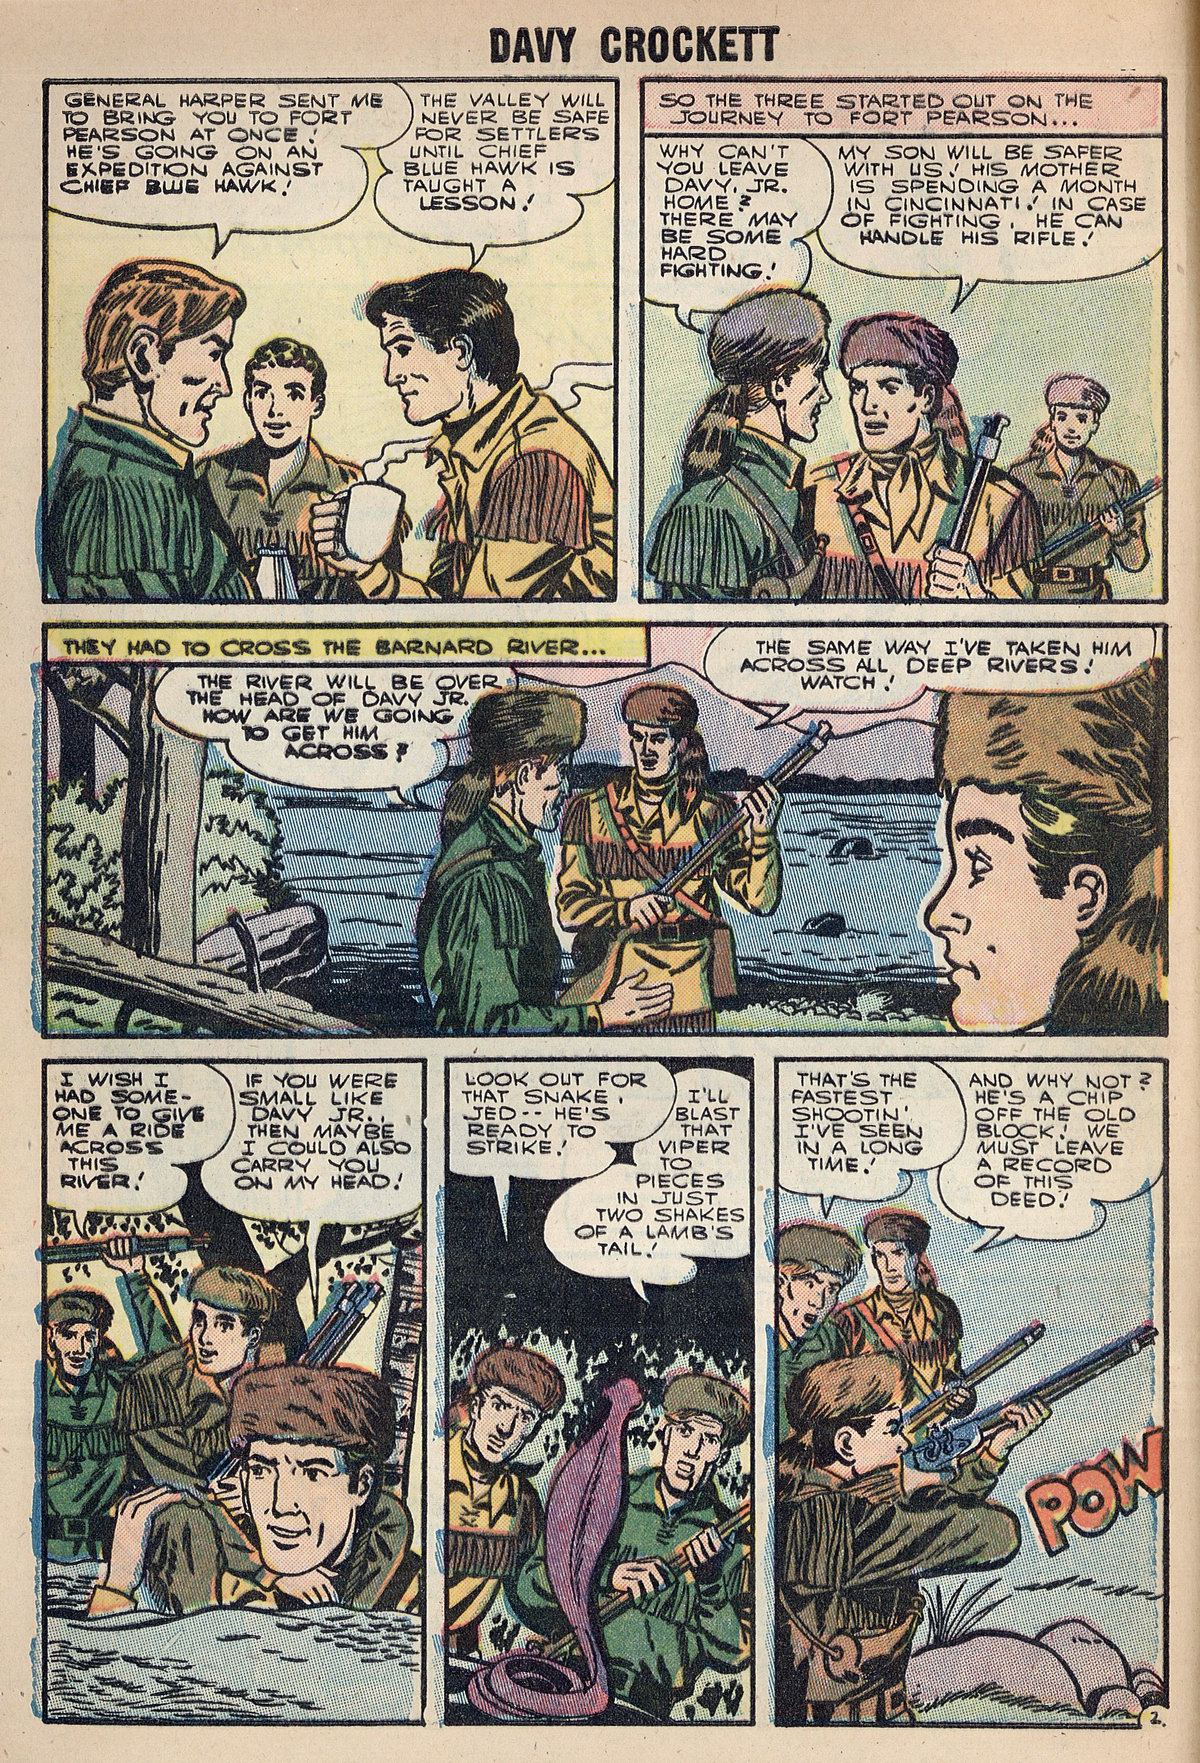 Read online Davy Crockett comic -  Issue #4 - 4